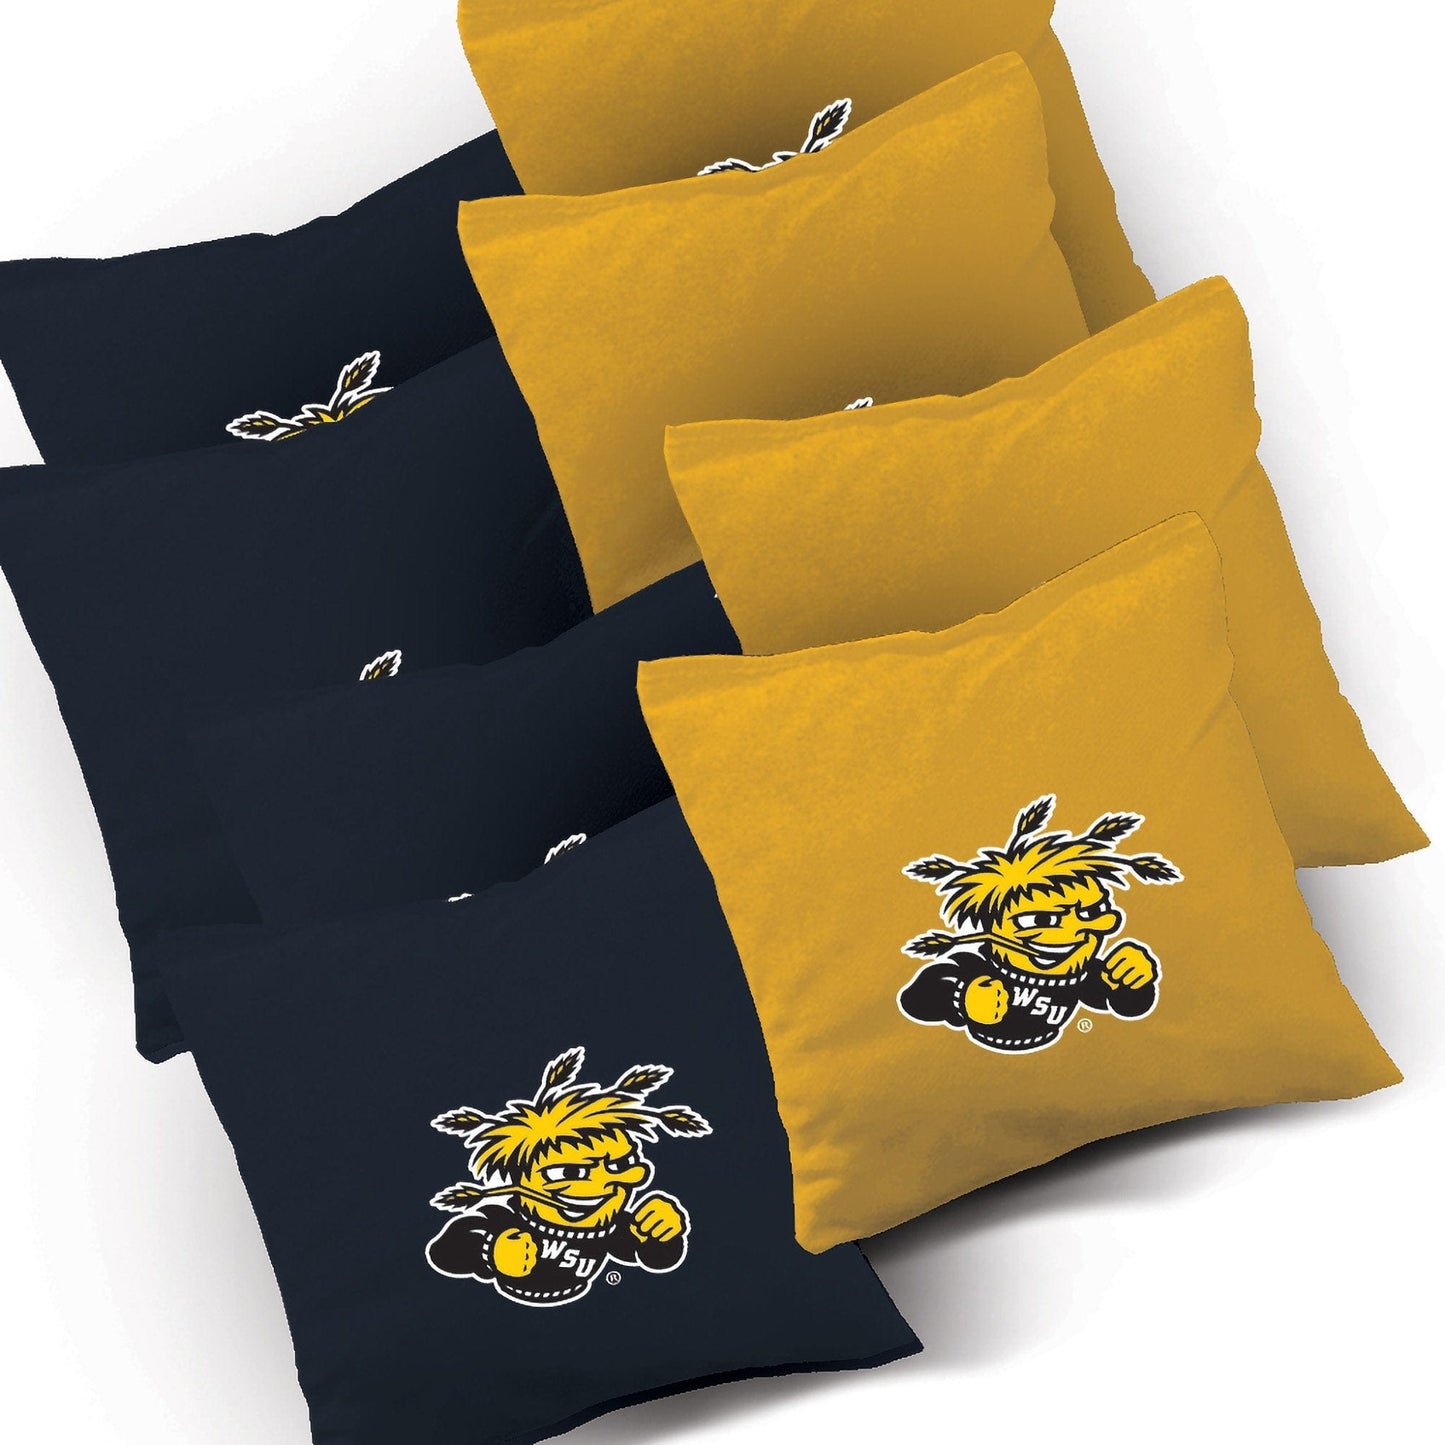 Wichita State Shockers Distressed team logo bags